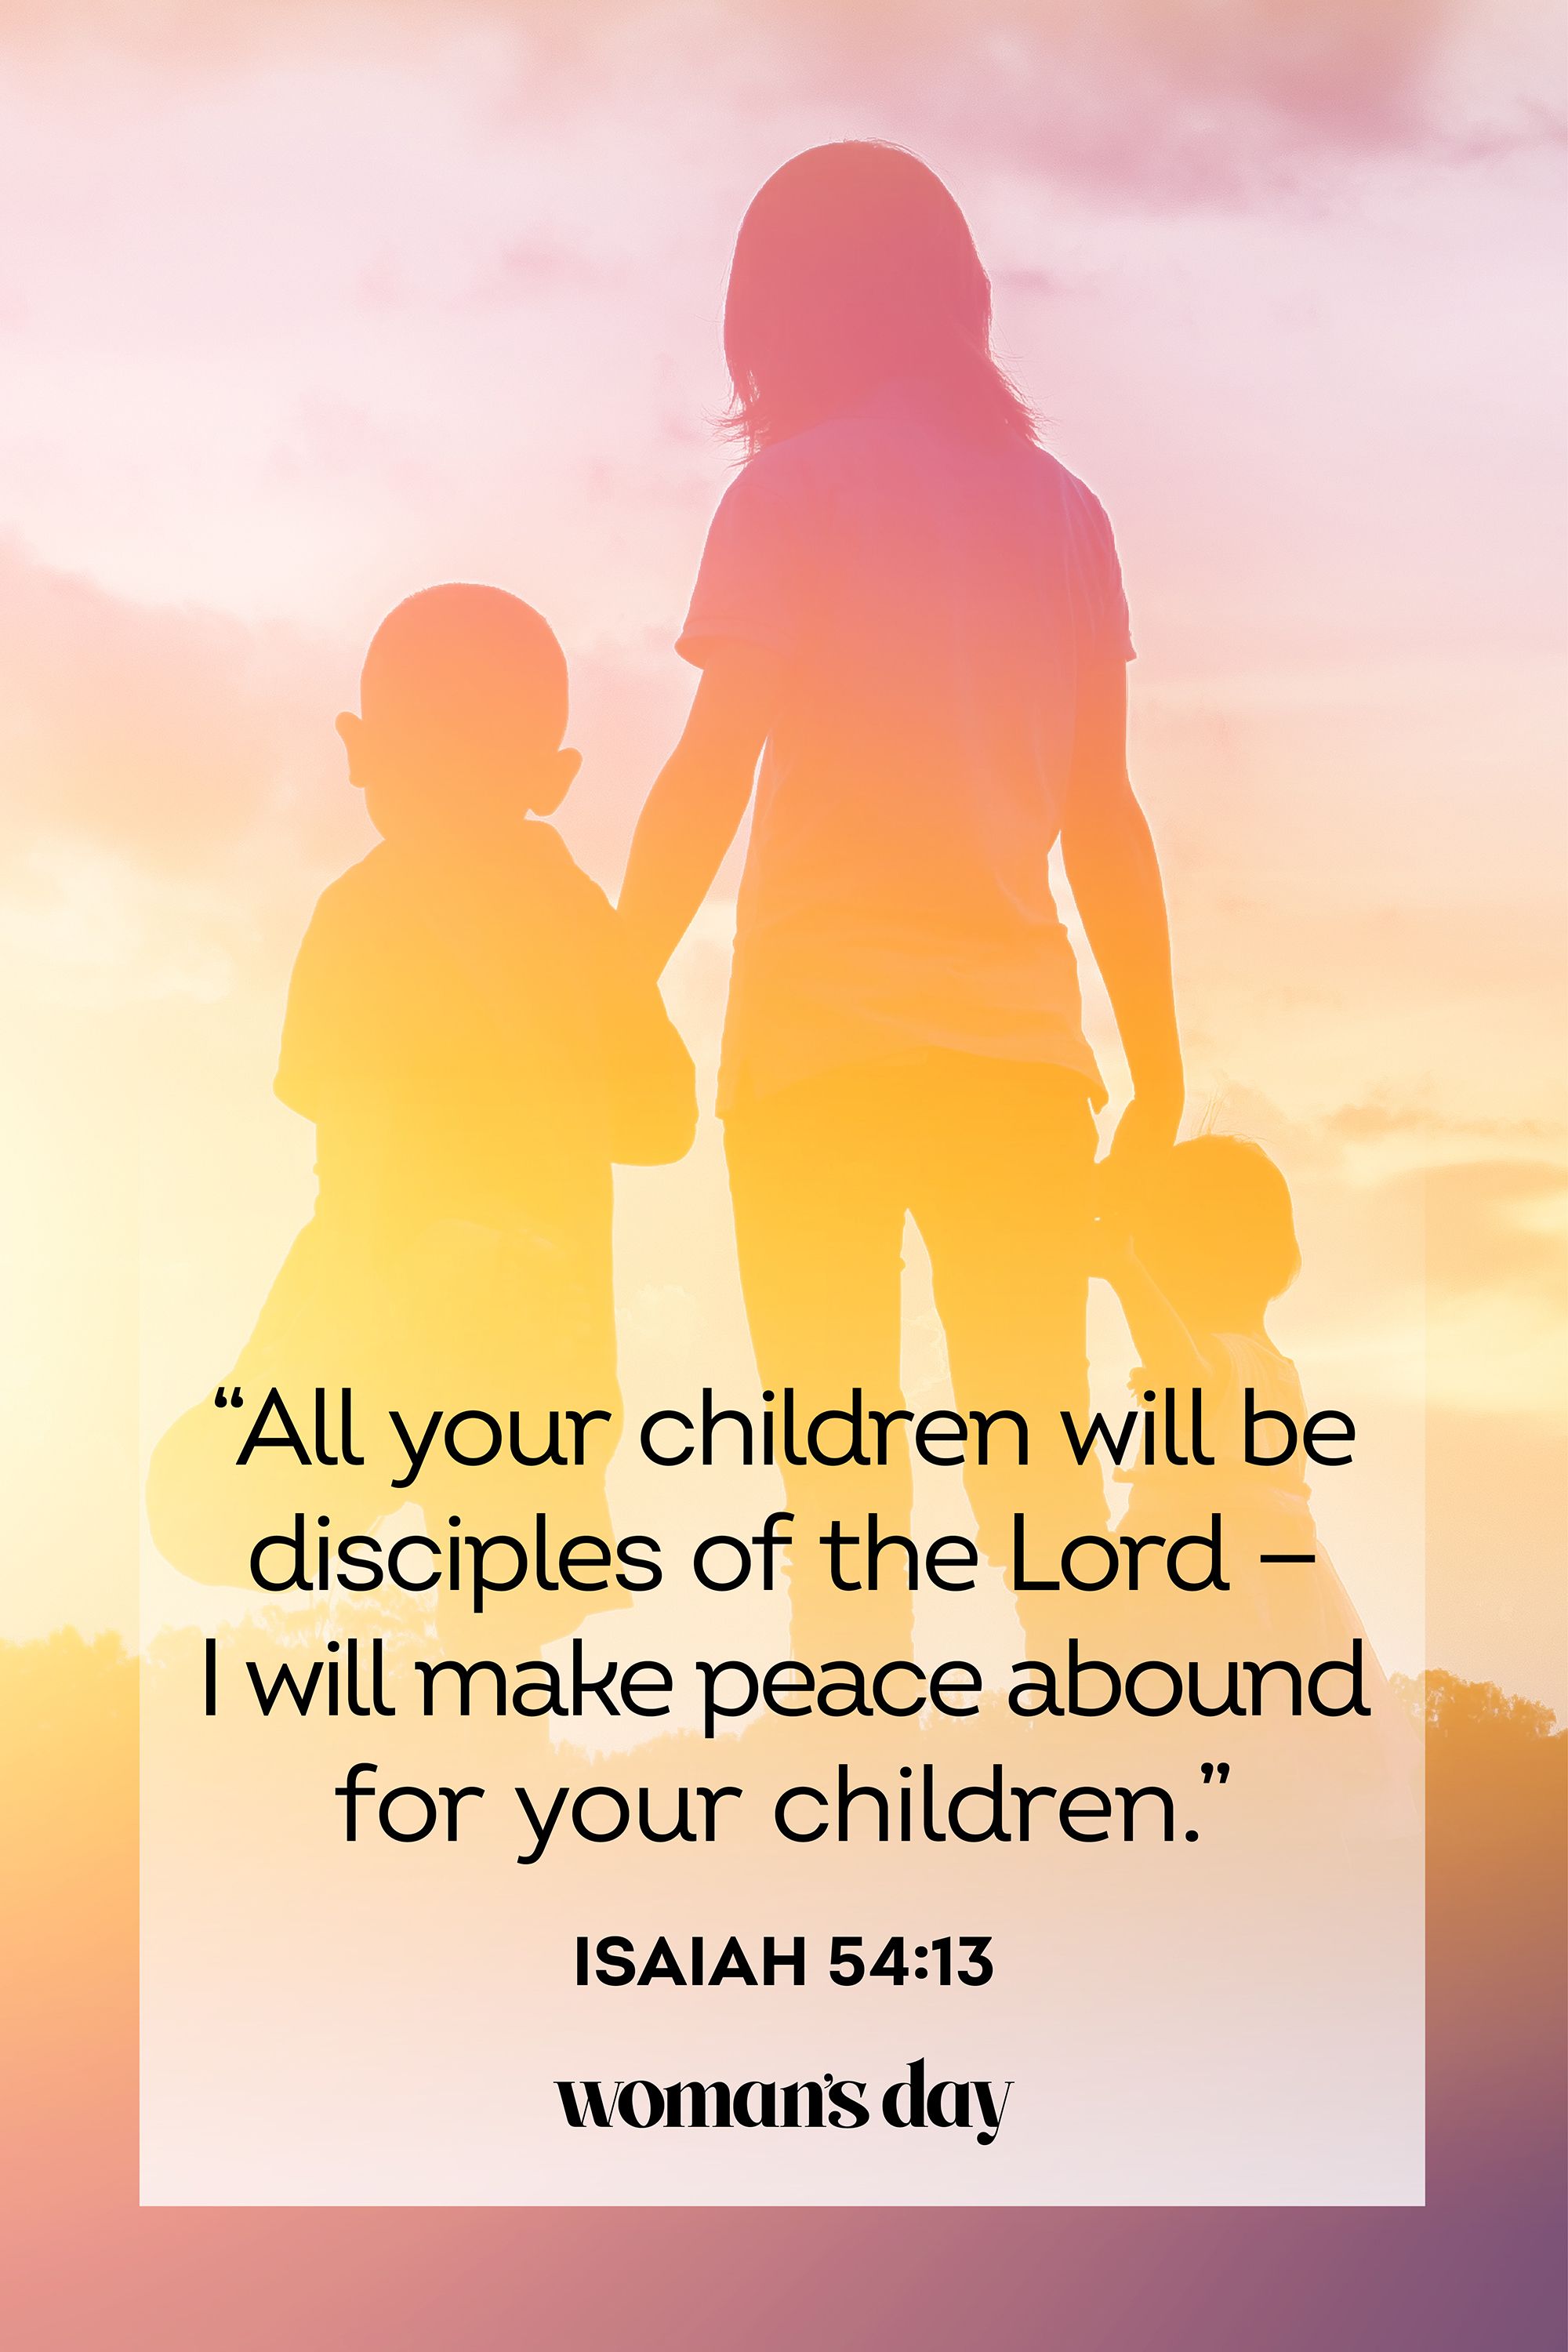 raising kingdom kids bible study